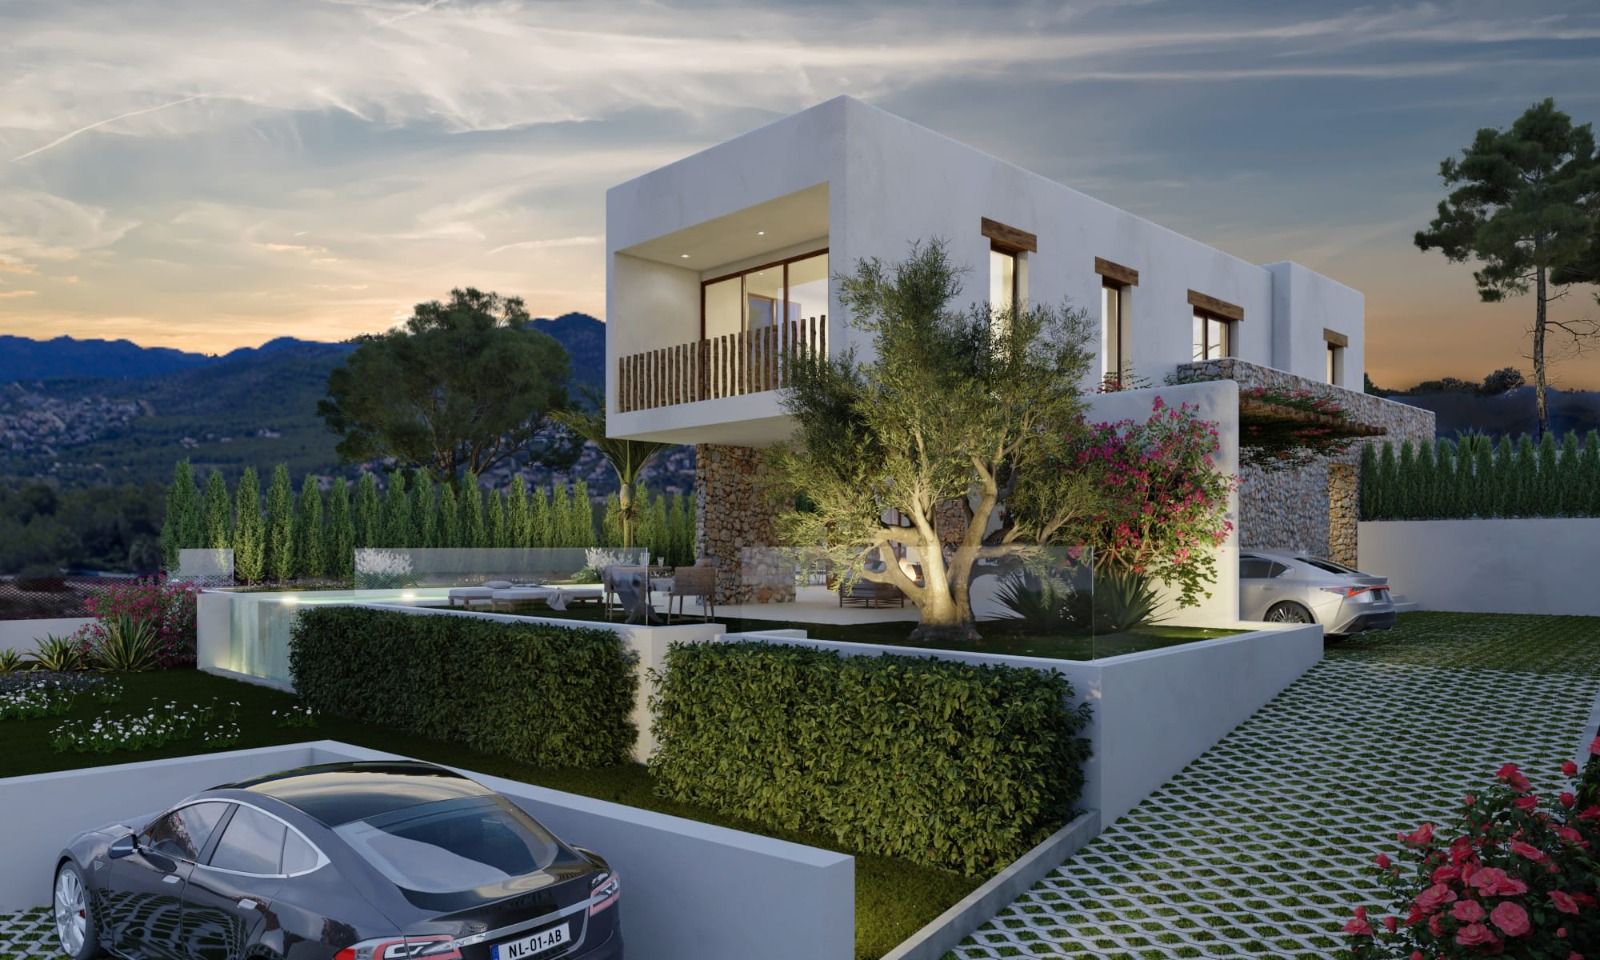 Villa neuve de style Ibiza à vendre à Las Laderas Jávea, Costa Blanca